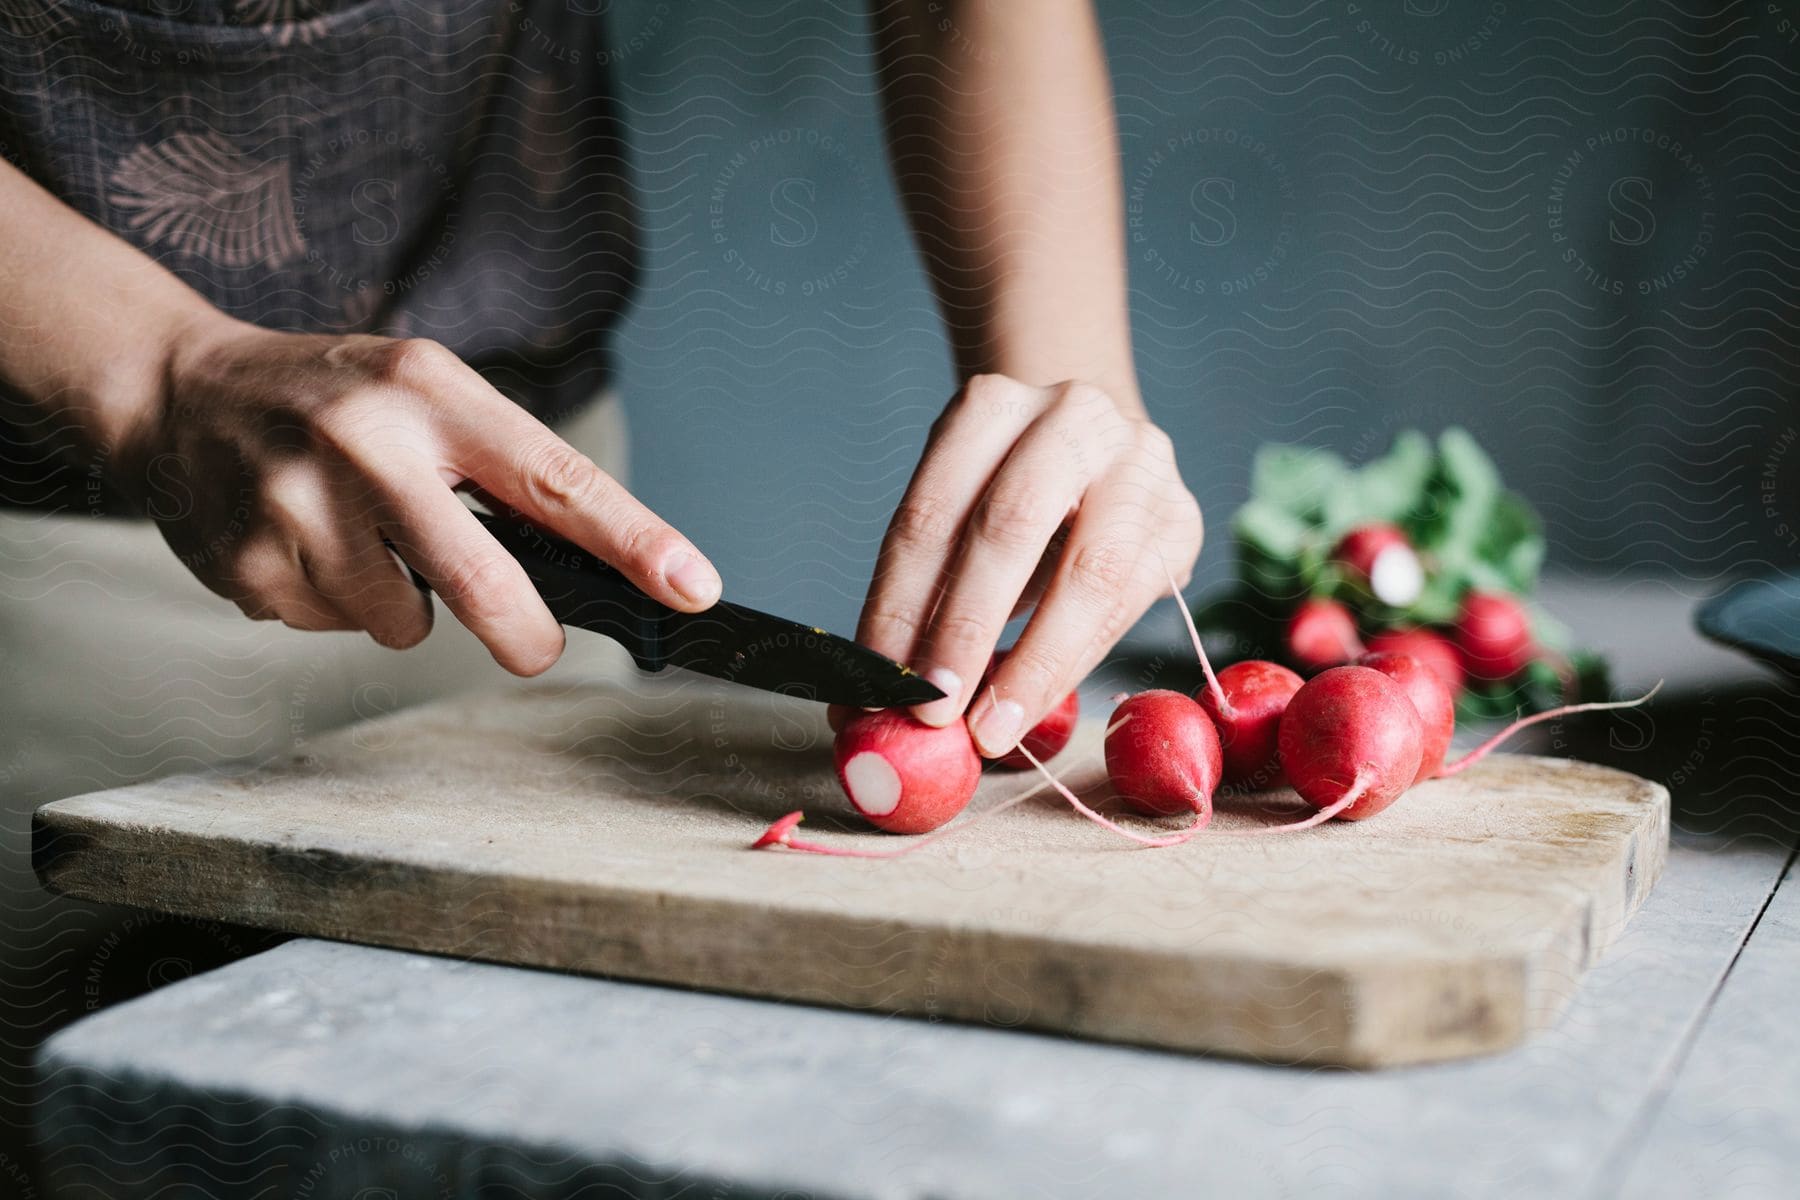 A chef slicing radishes on a cutting board